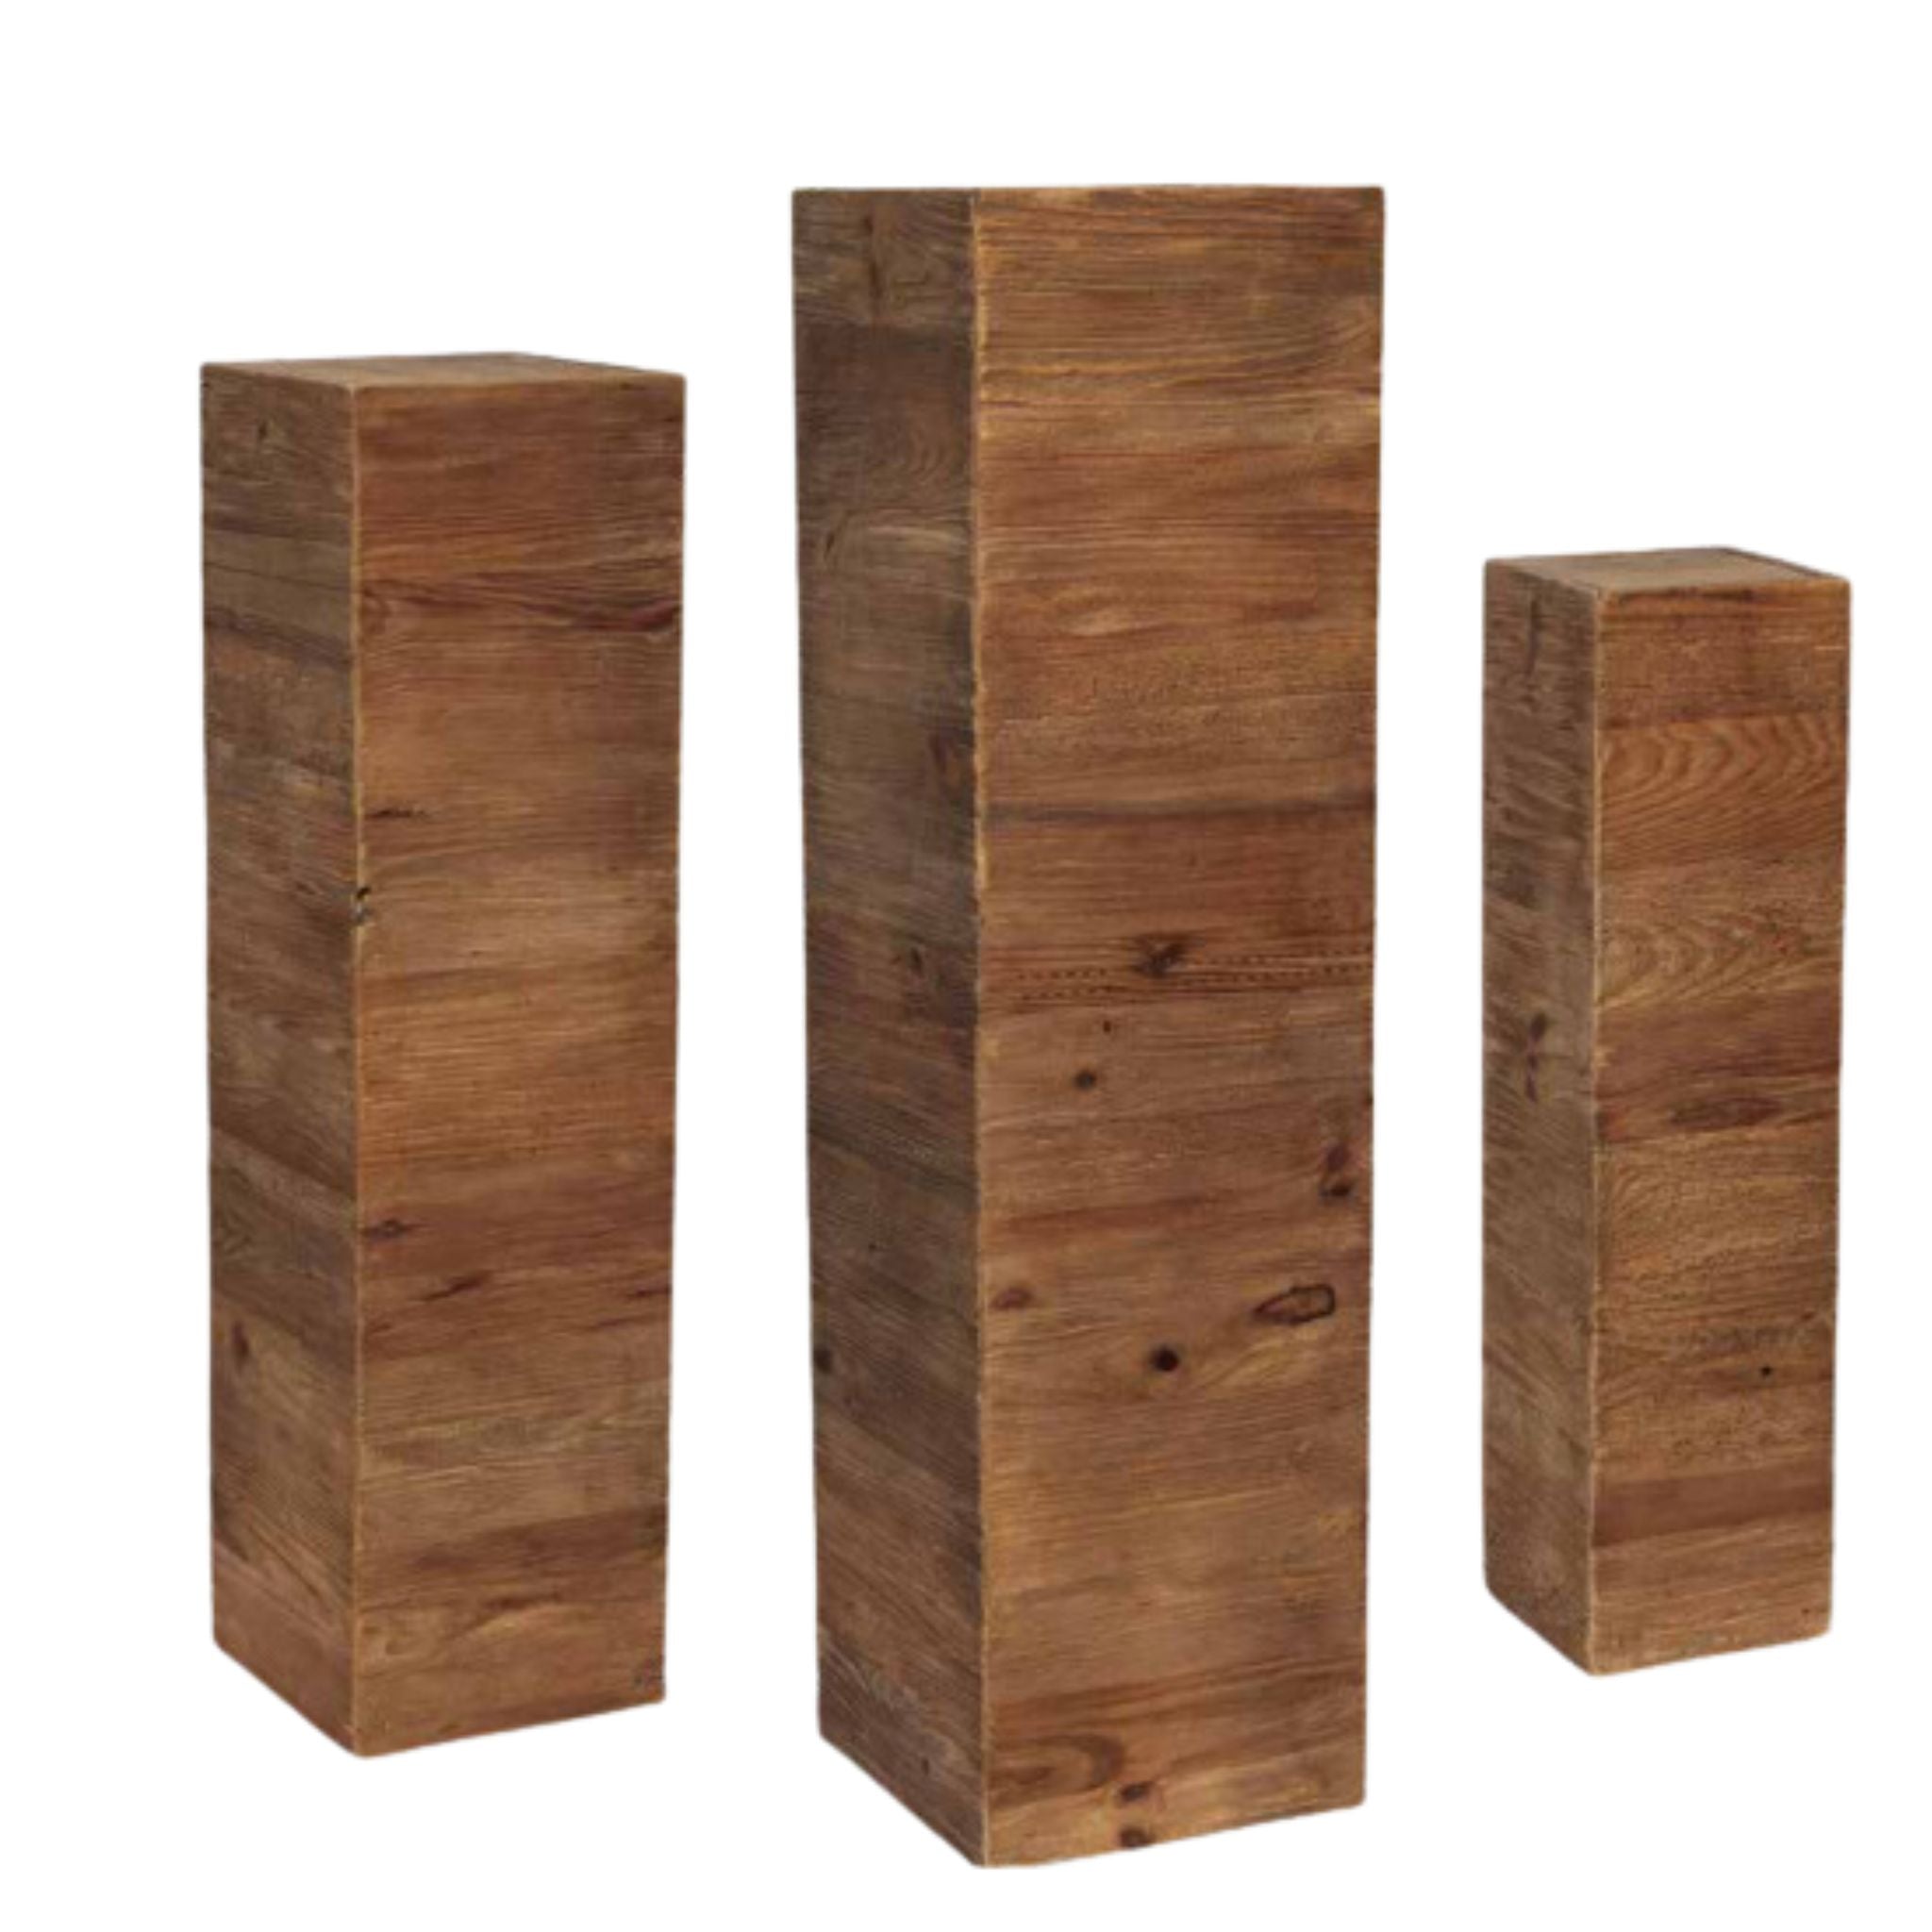 Decorative pillars made of pine wood - 0